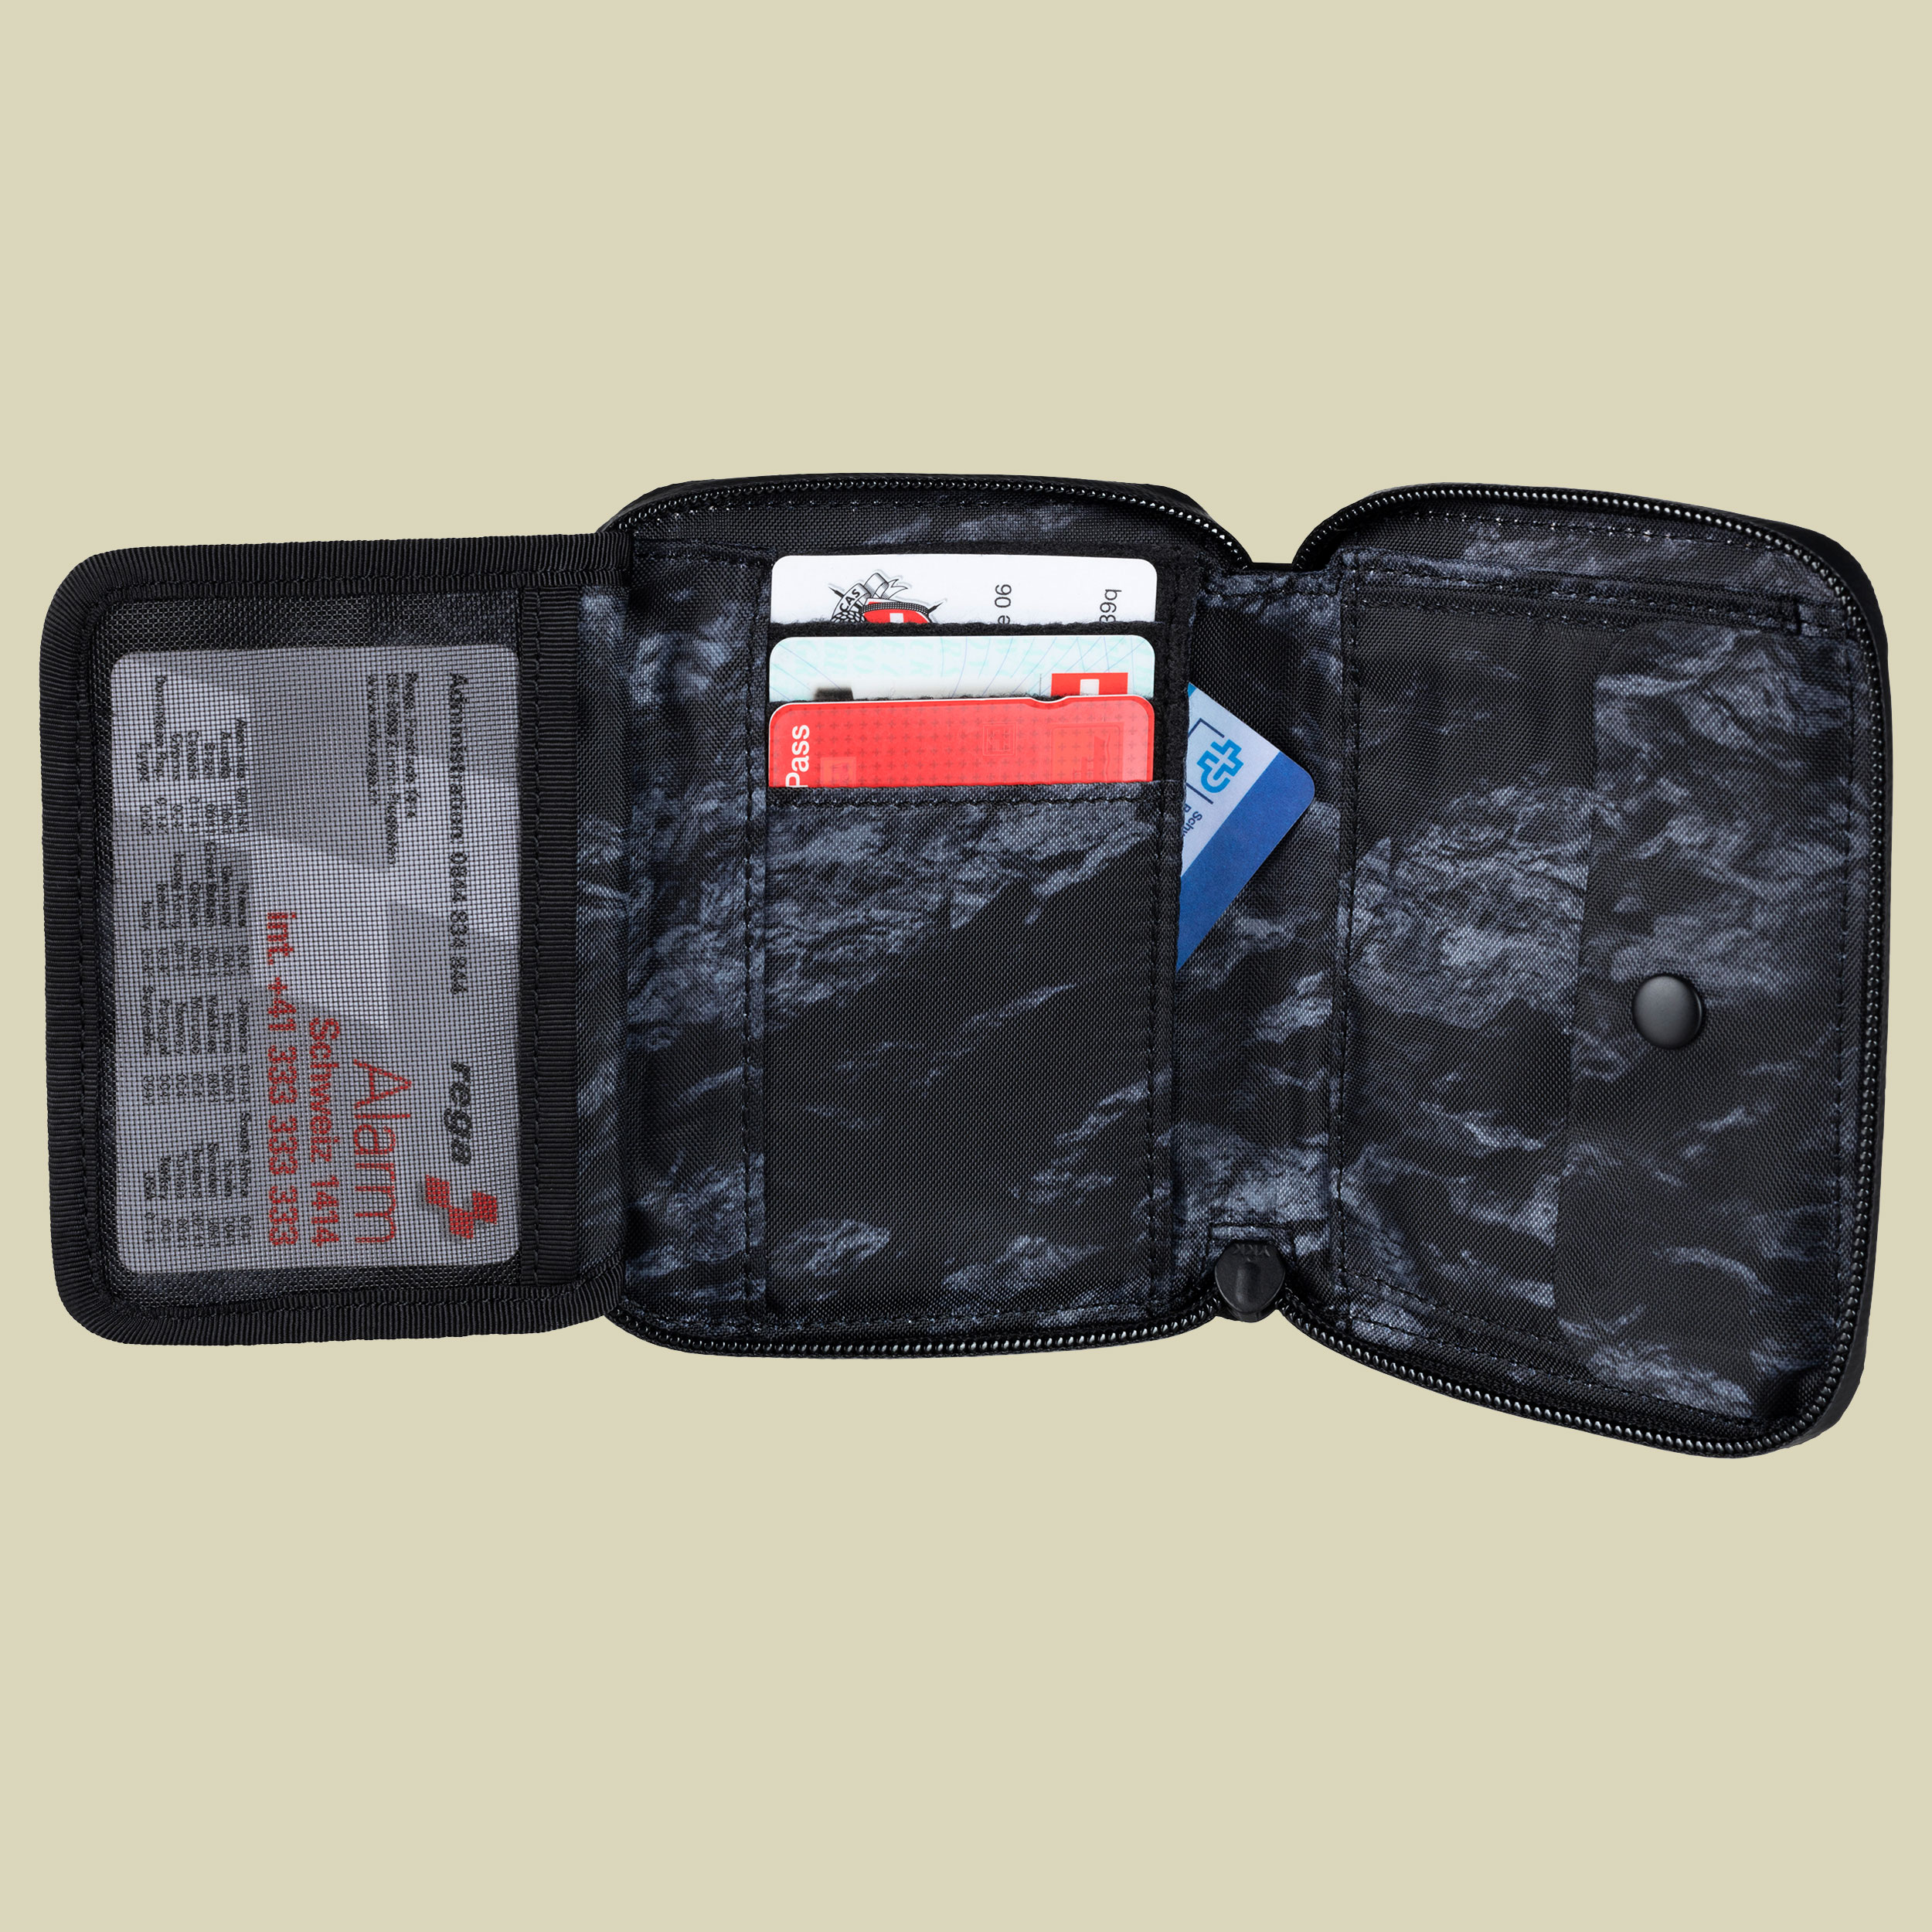 Seon Zip Wallet one size schwarz - black